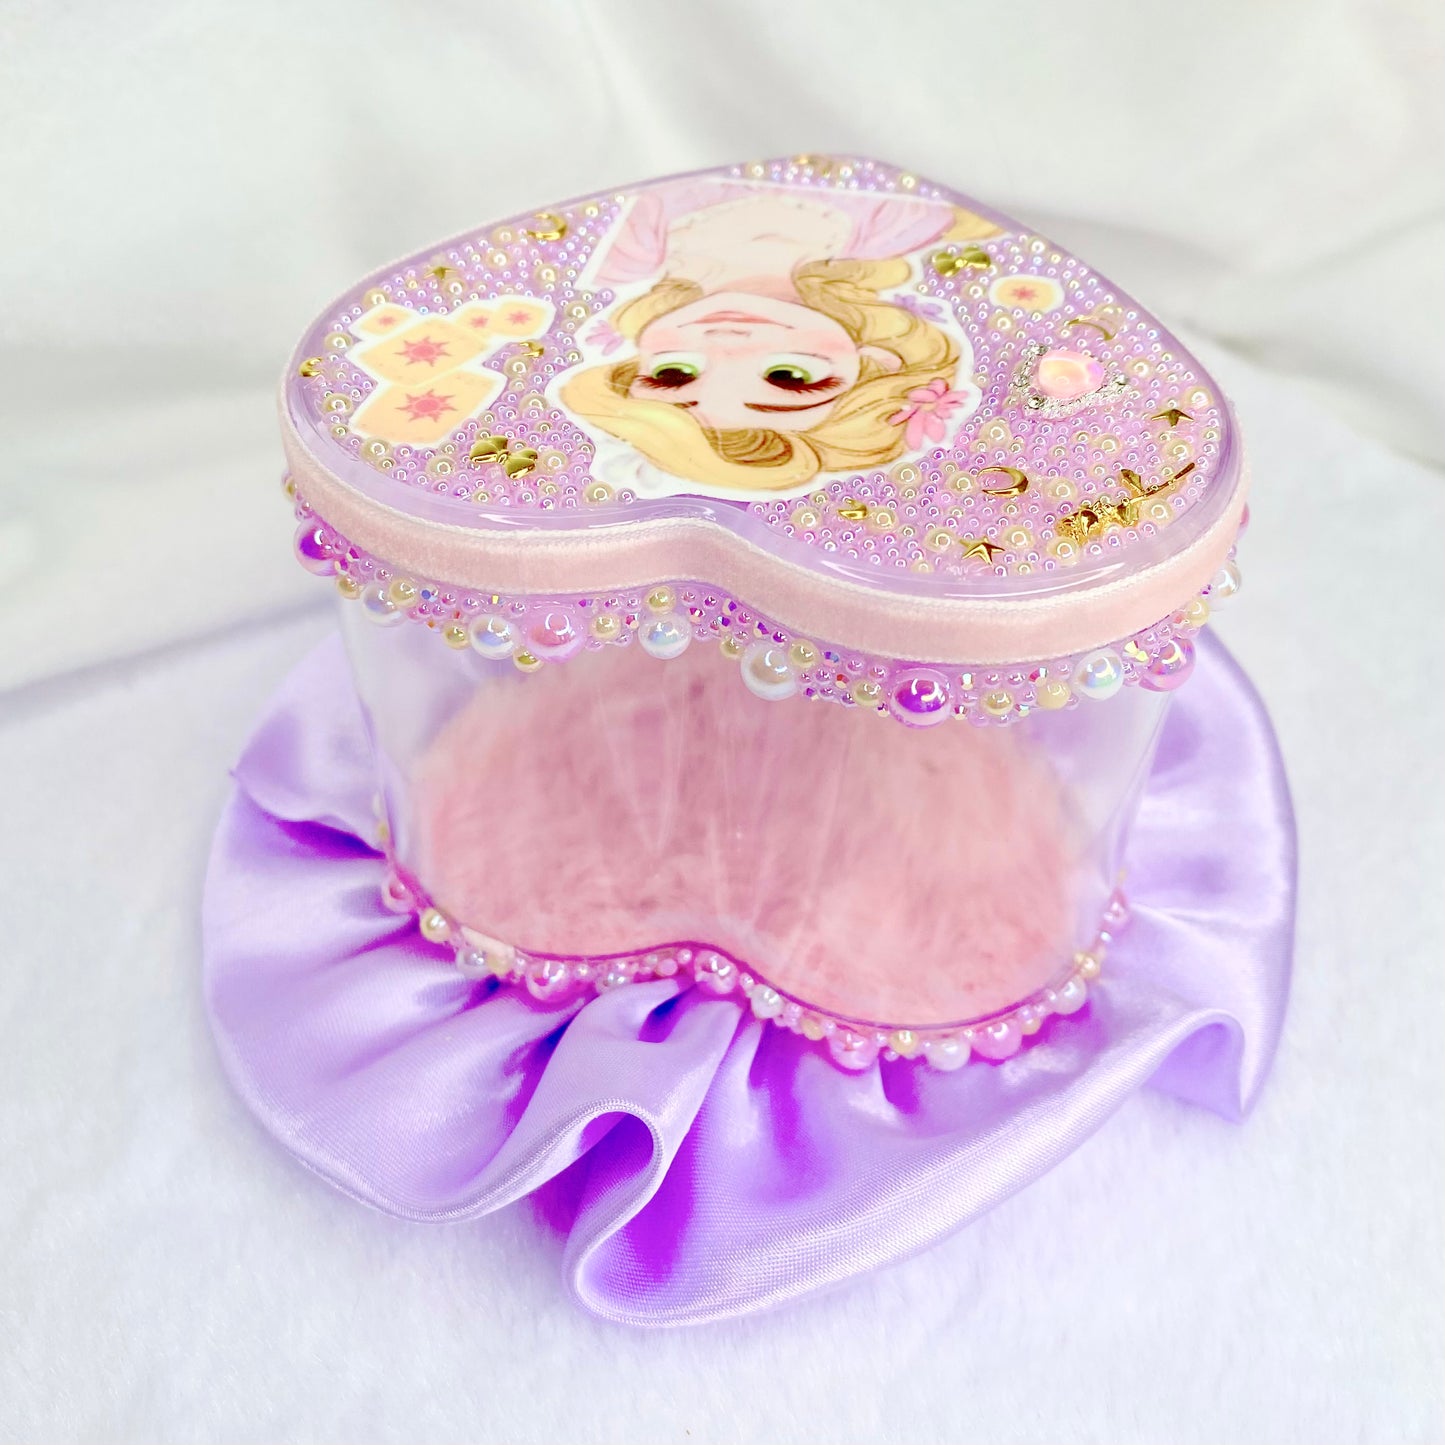 Lost Princess rapunzel - Trinket box